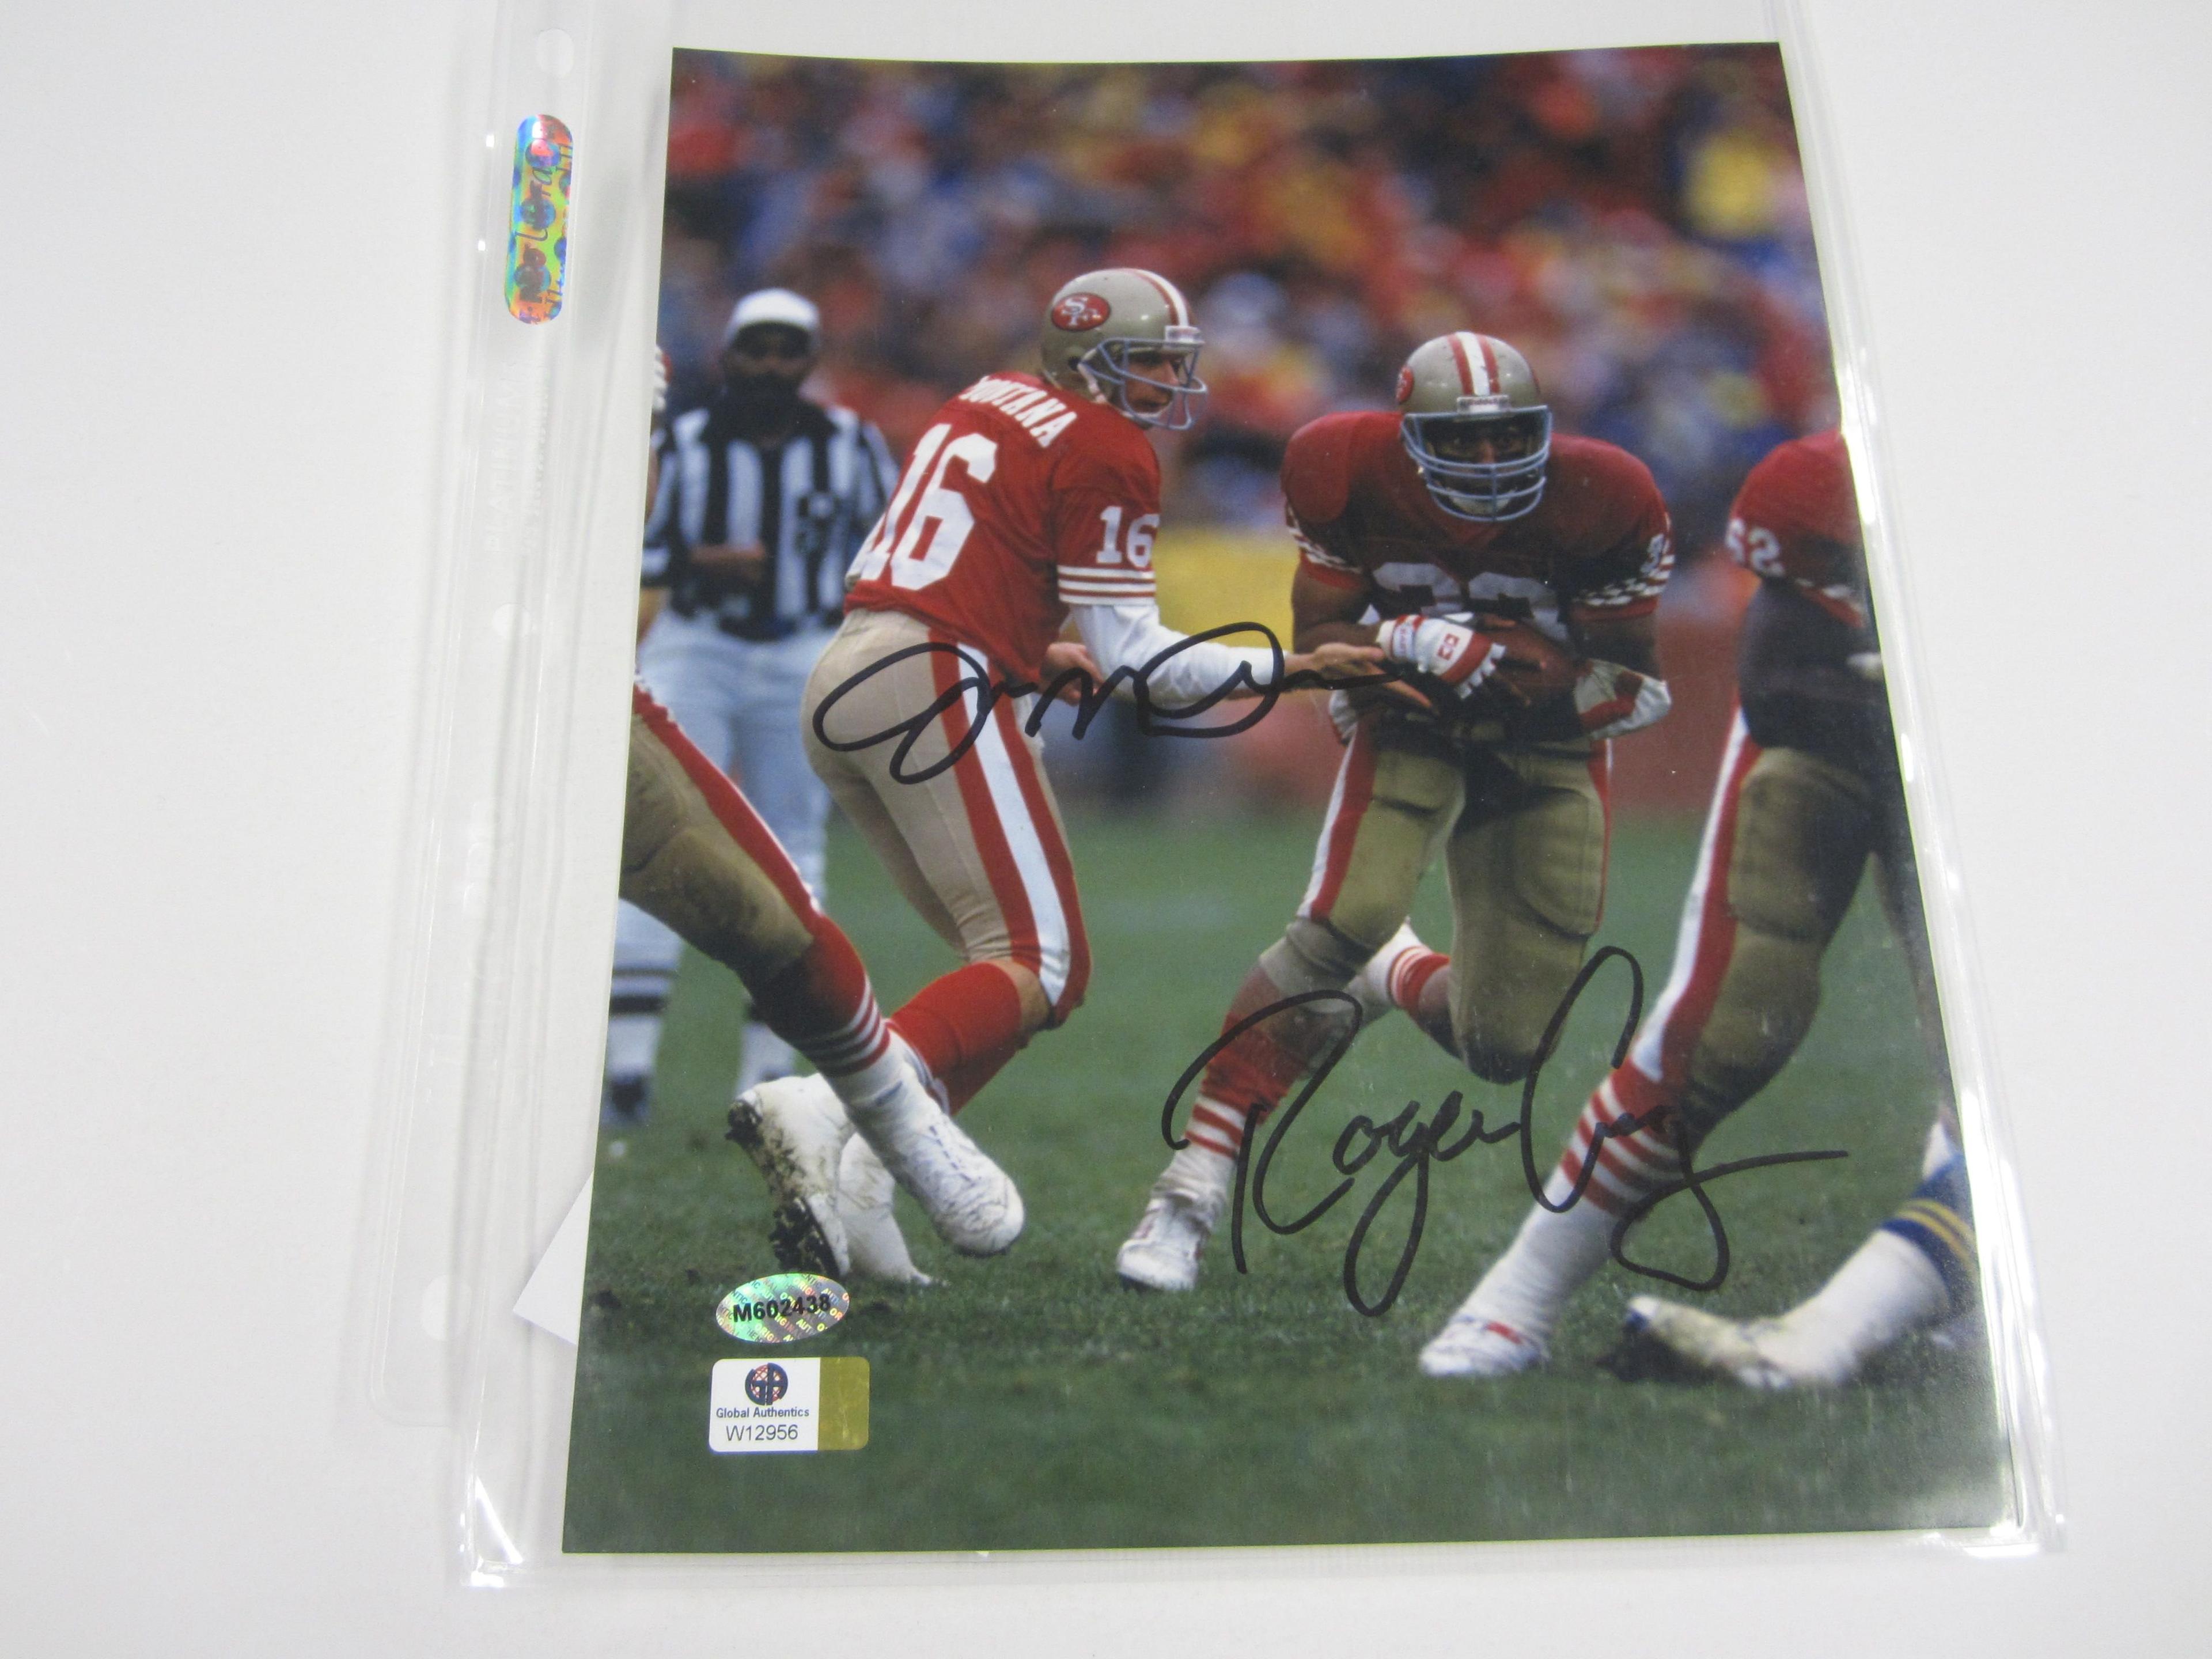 Joe Montana Roger Craig San Francisco 49ers signed autographed 8x10 color photo Certified COA